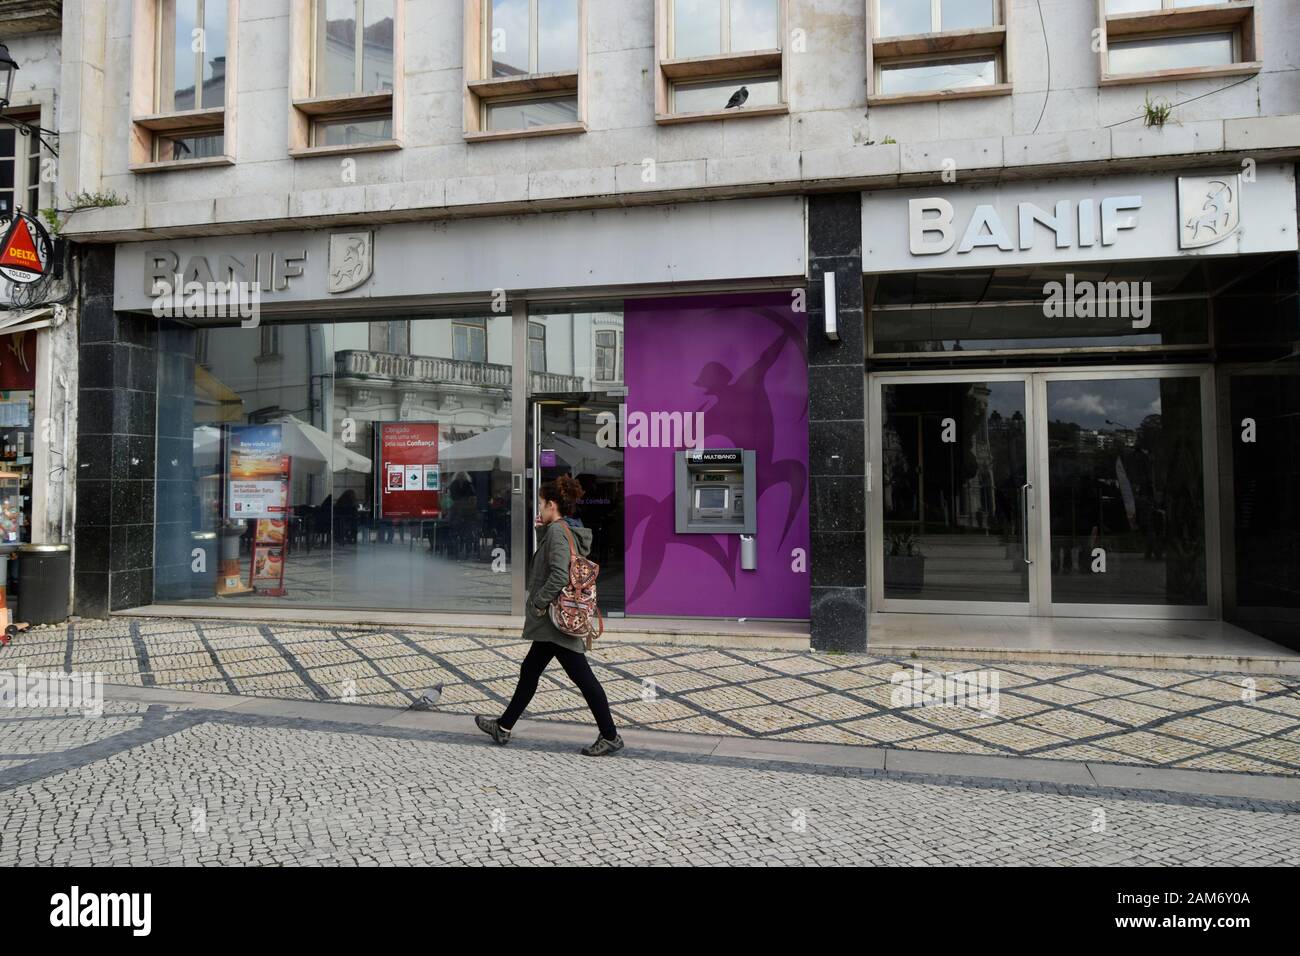 BANIF bank branch in Coimbra Portugal Stock Photo